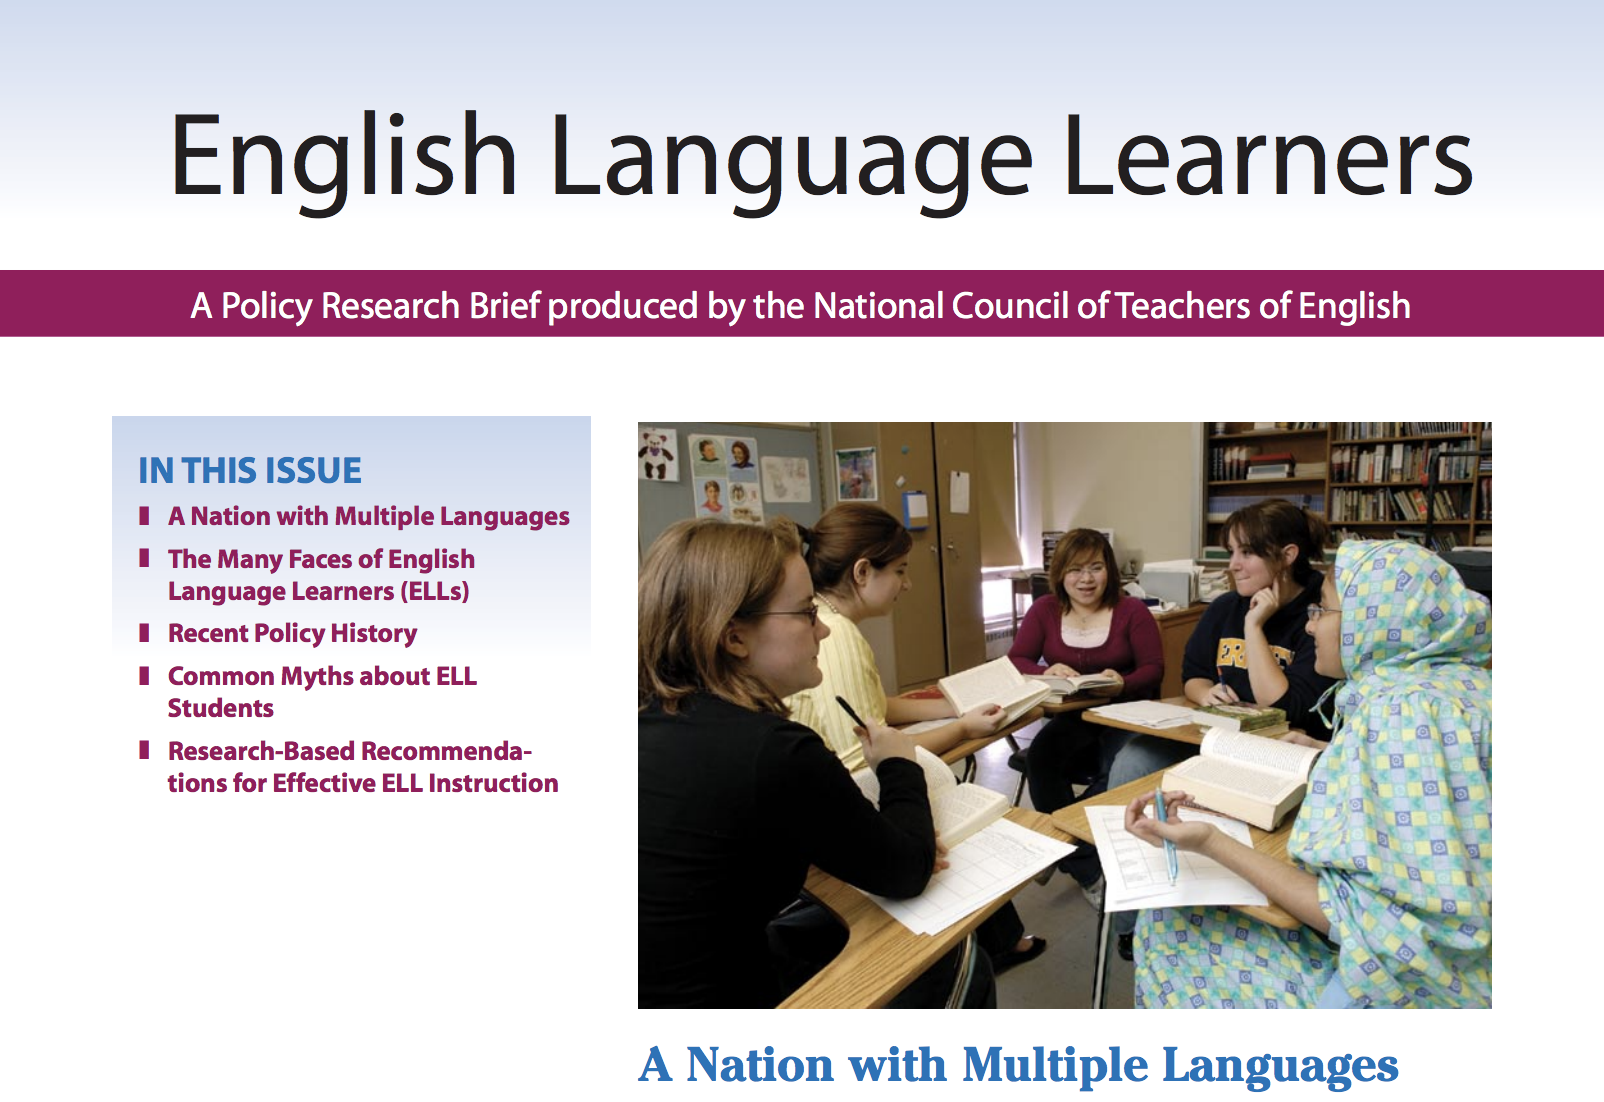 case study on english language learners